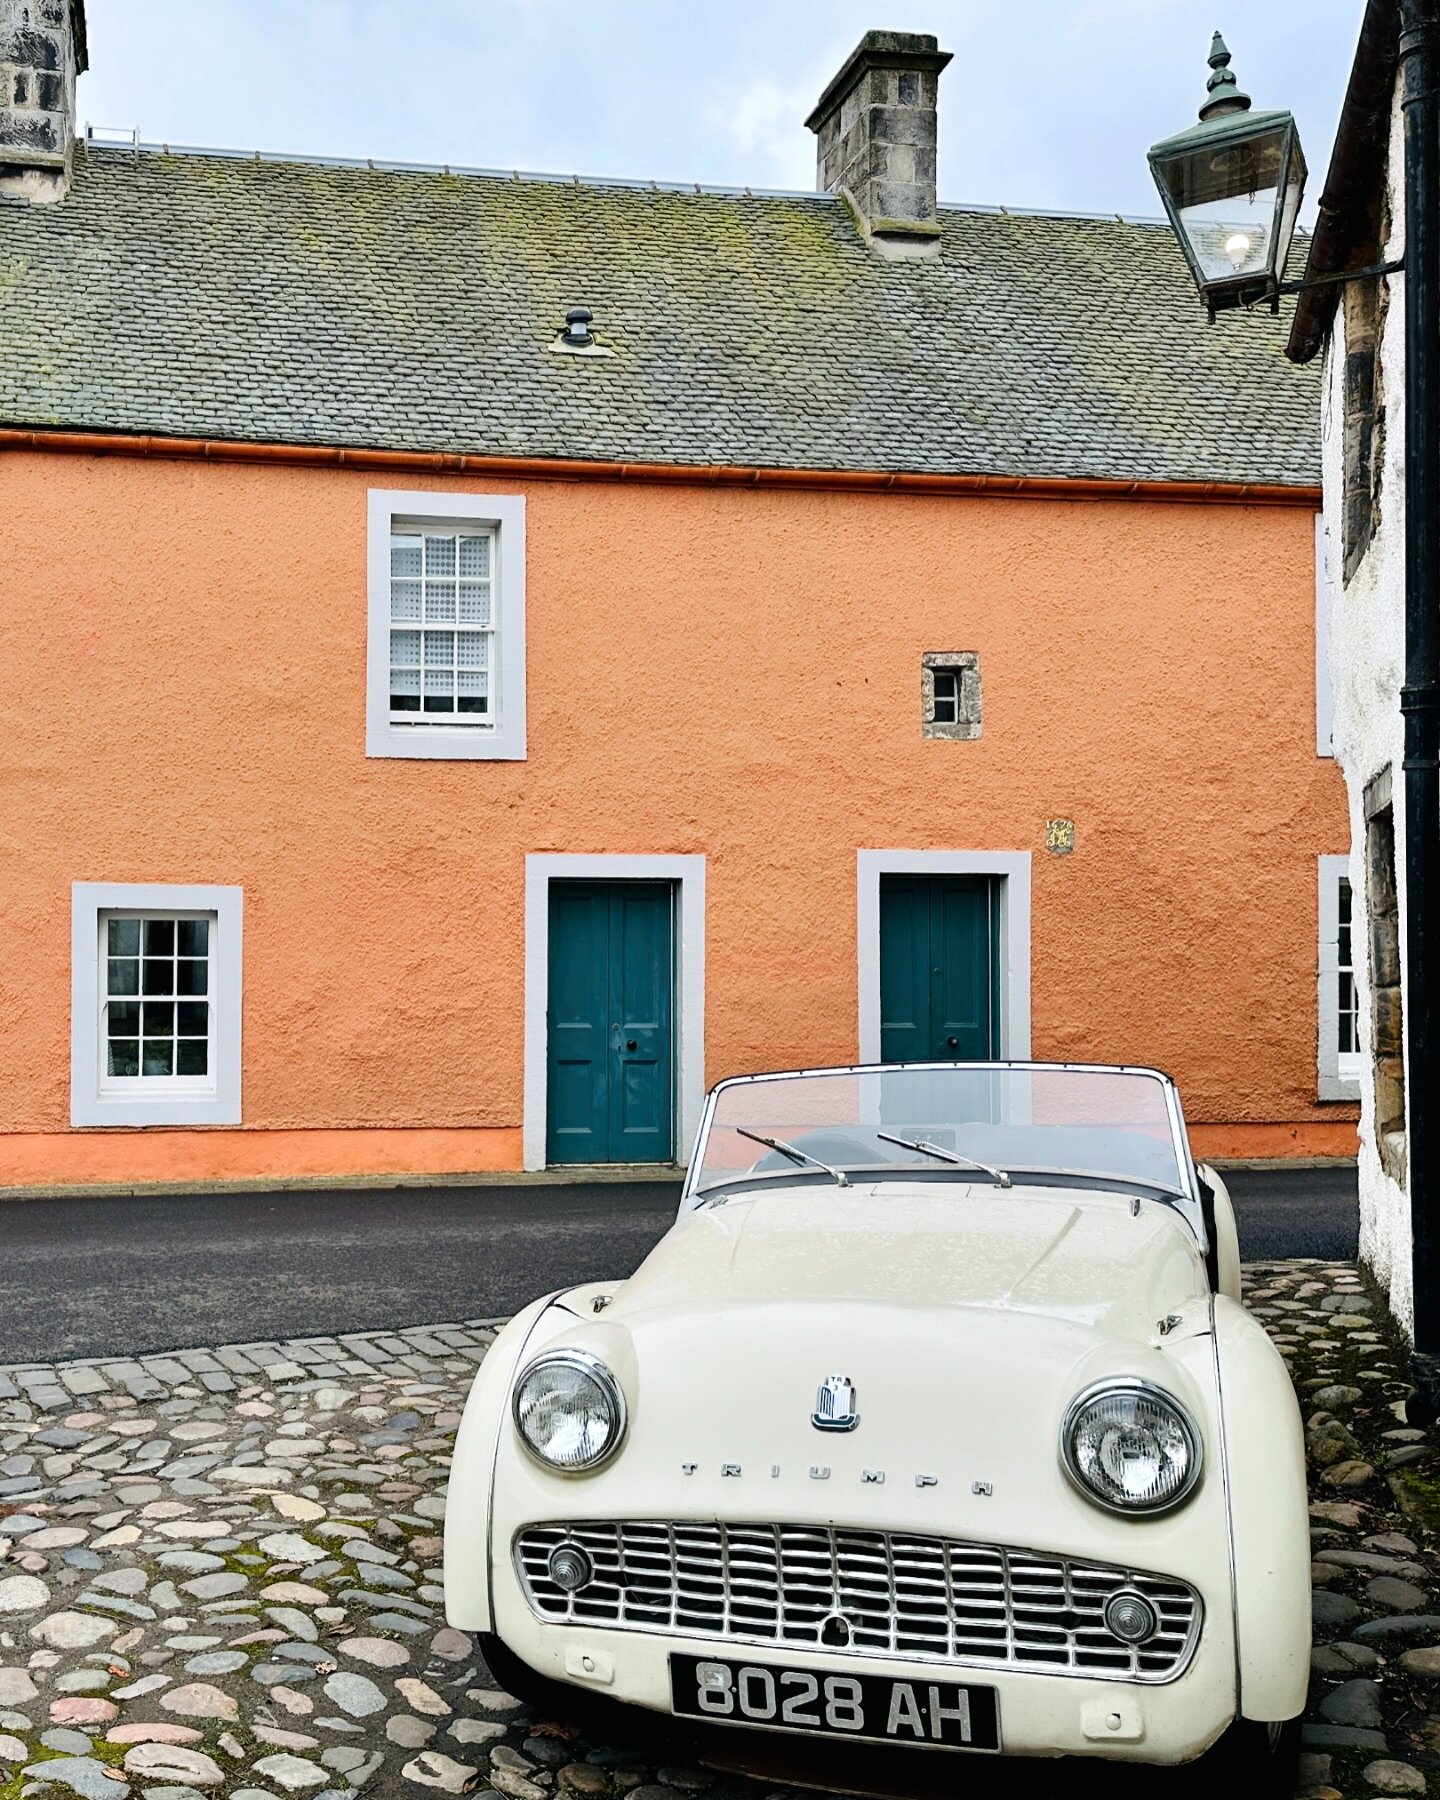 Cruising through history in the quaint streets of Culross, Scotland #vintagevibes #historiccharm #scotlandadventures